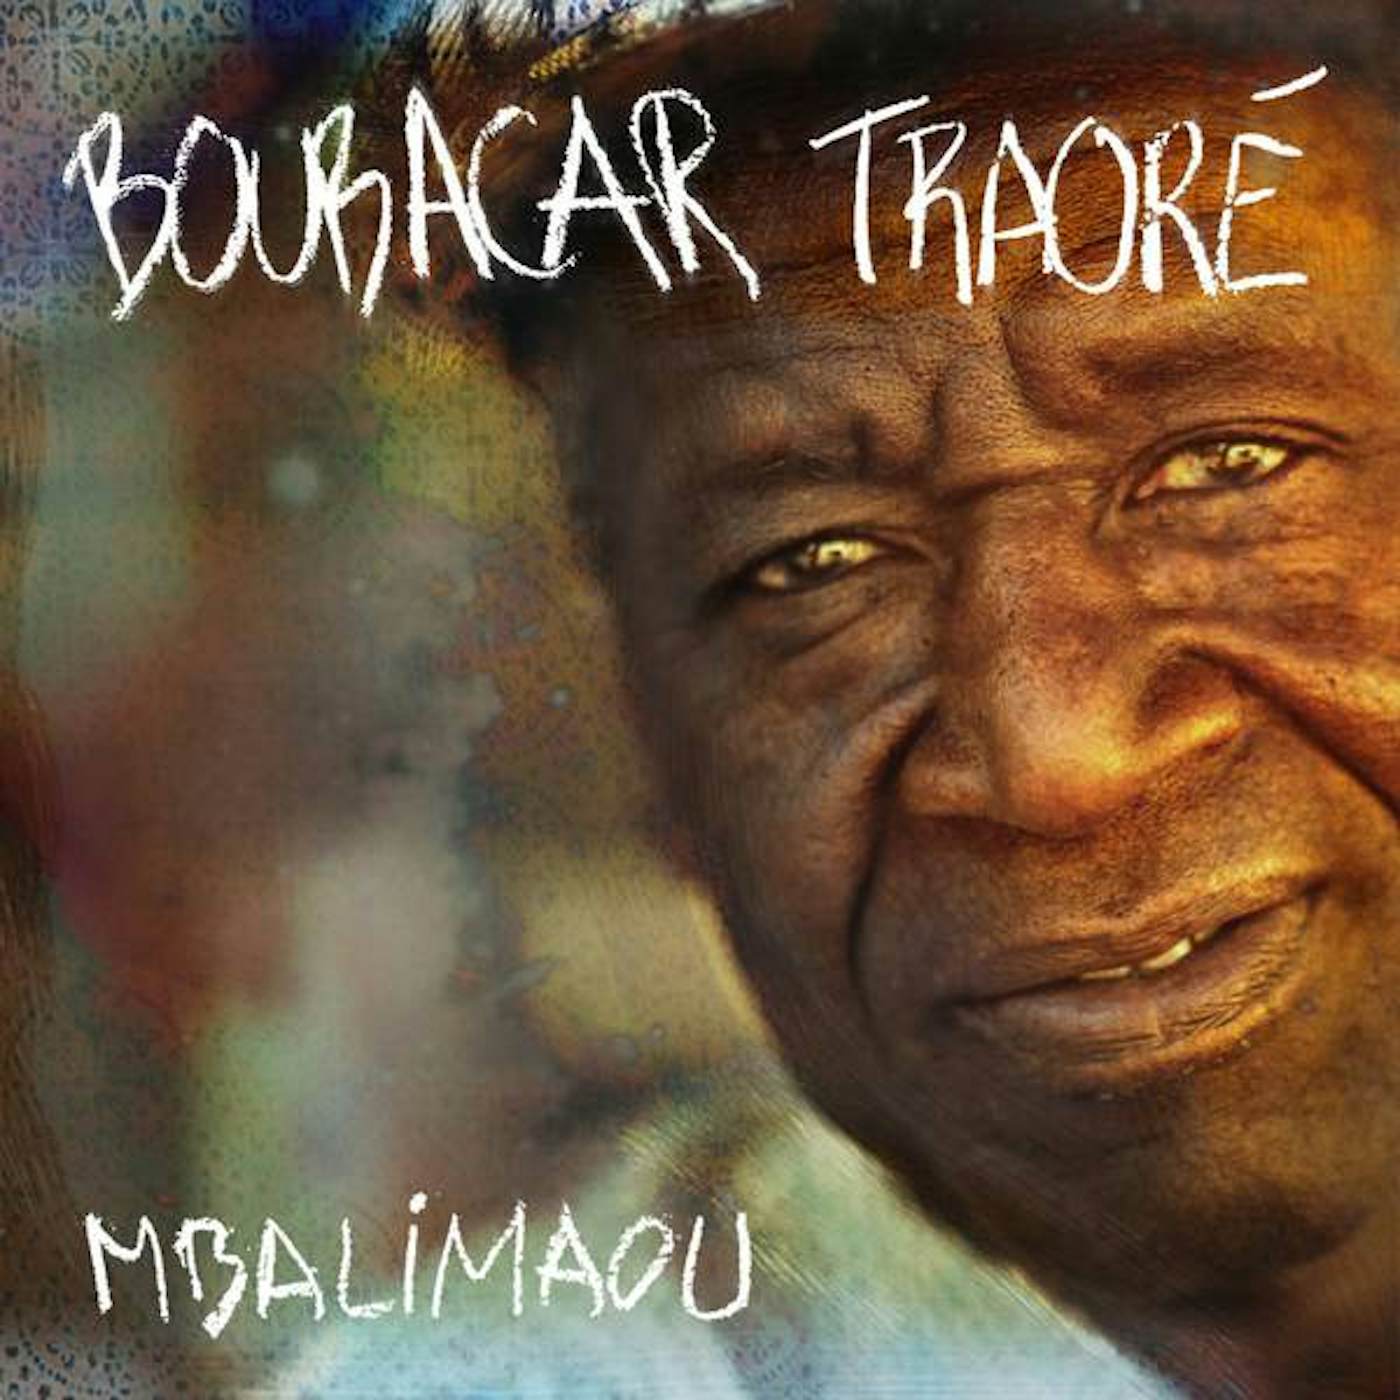 Boubacar Traoré Mbalimaou Vinyl Record